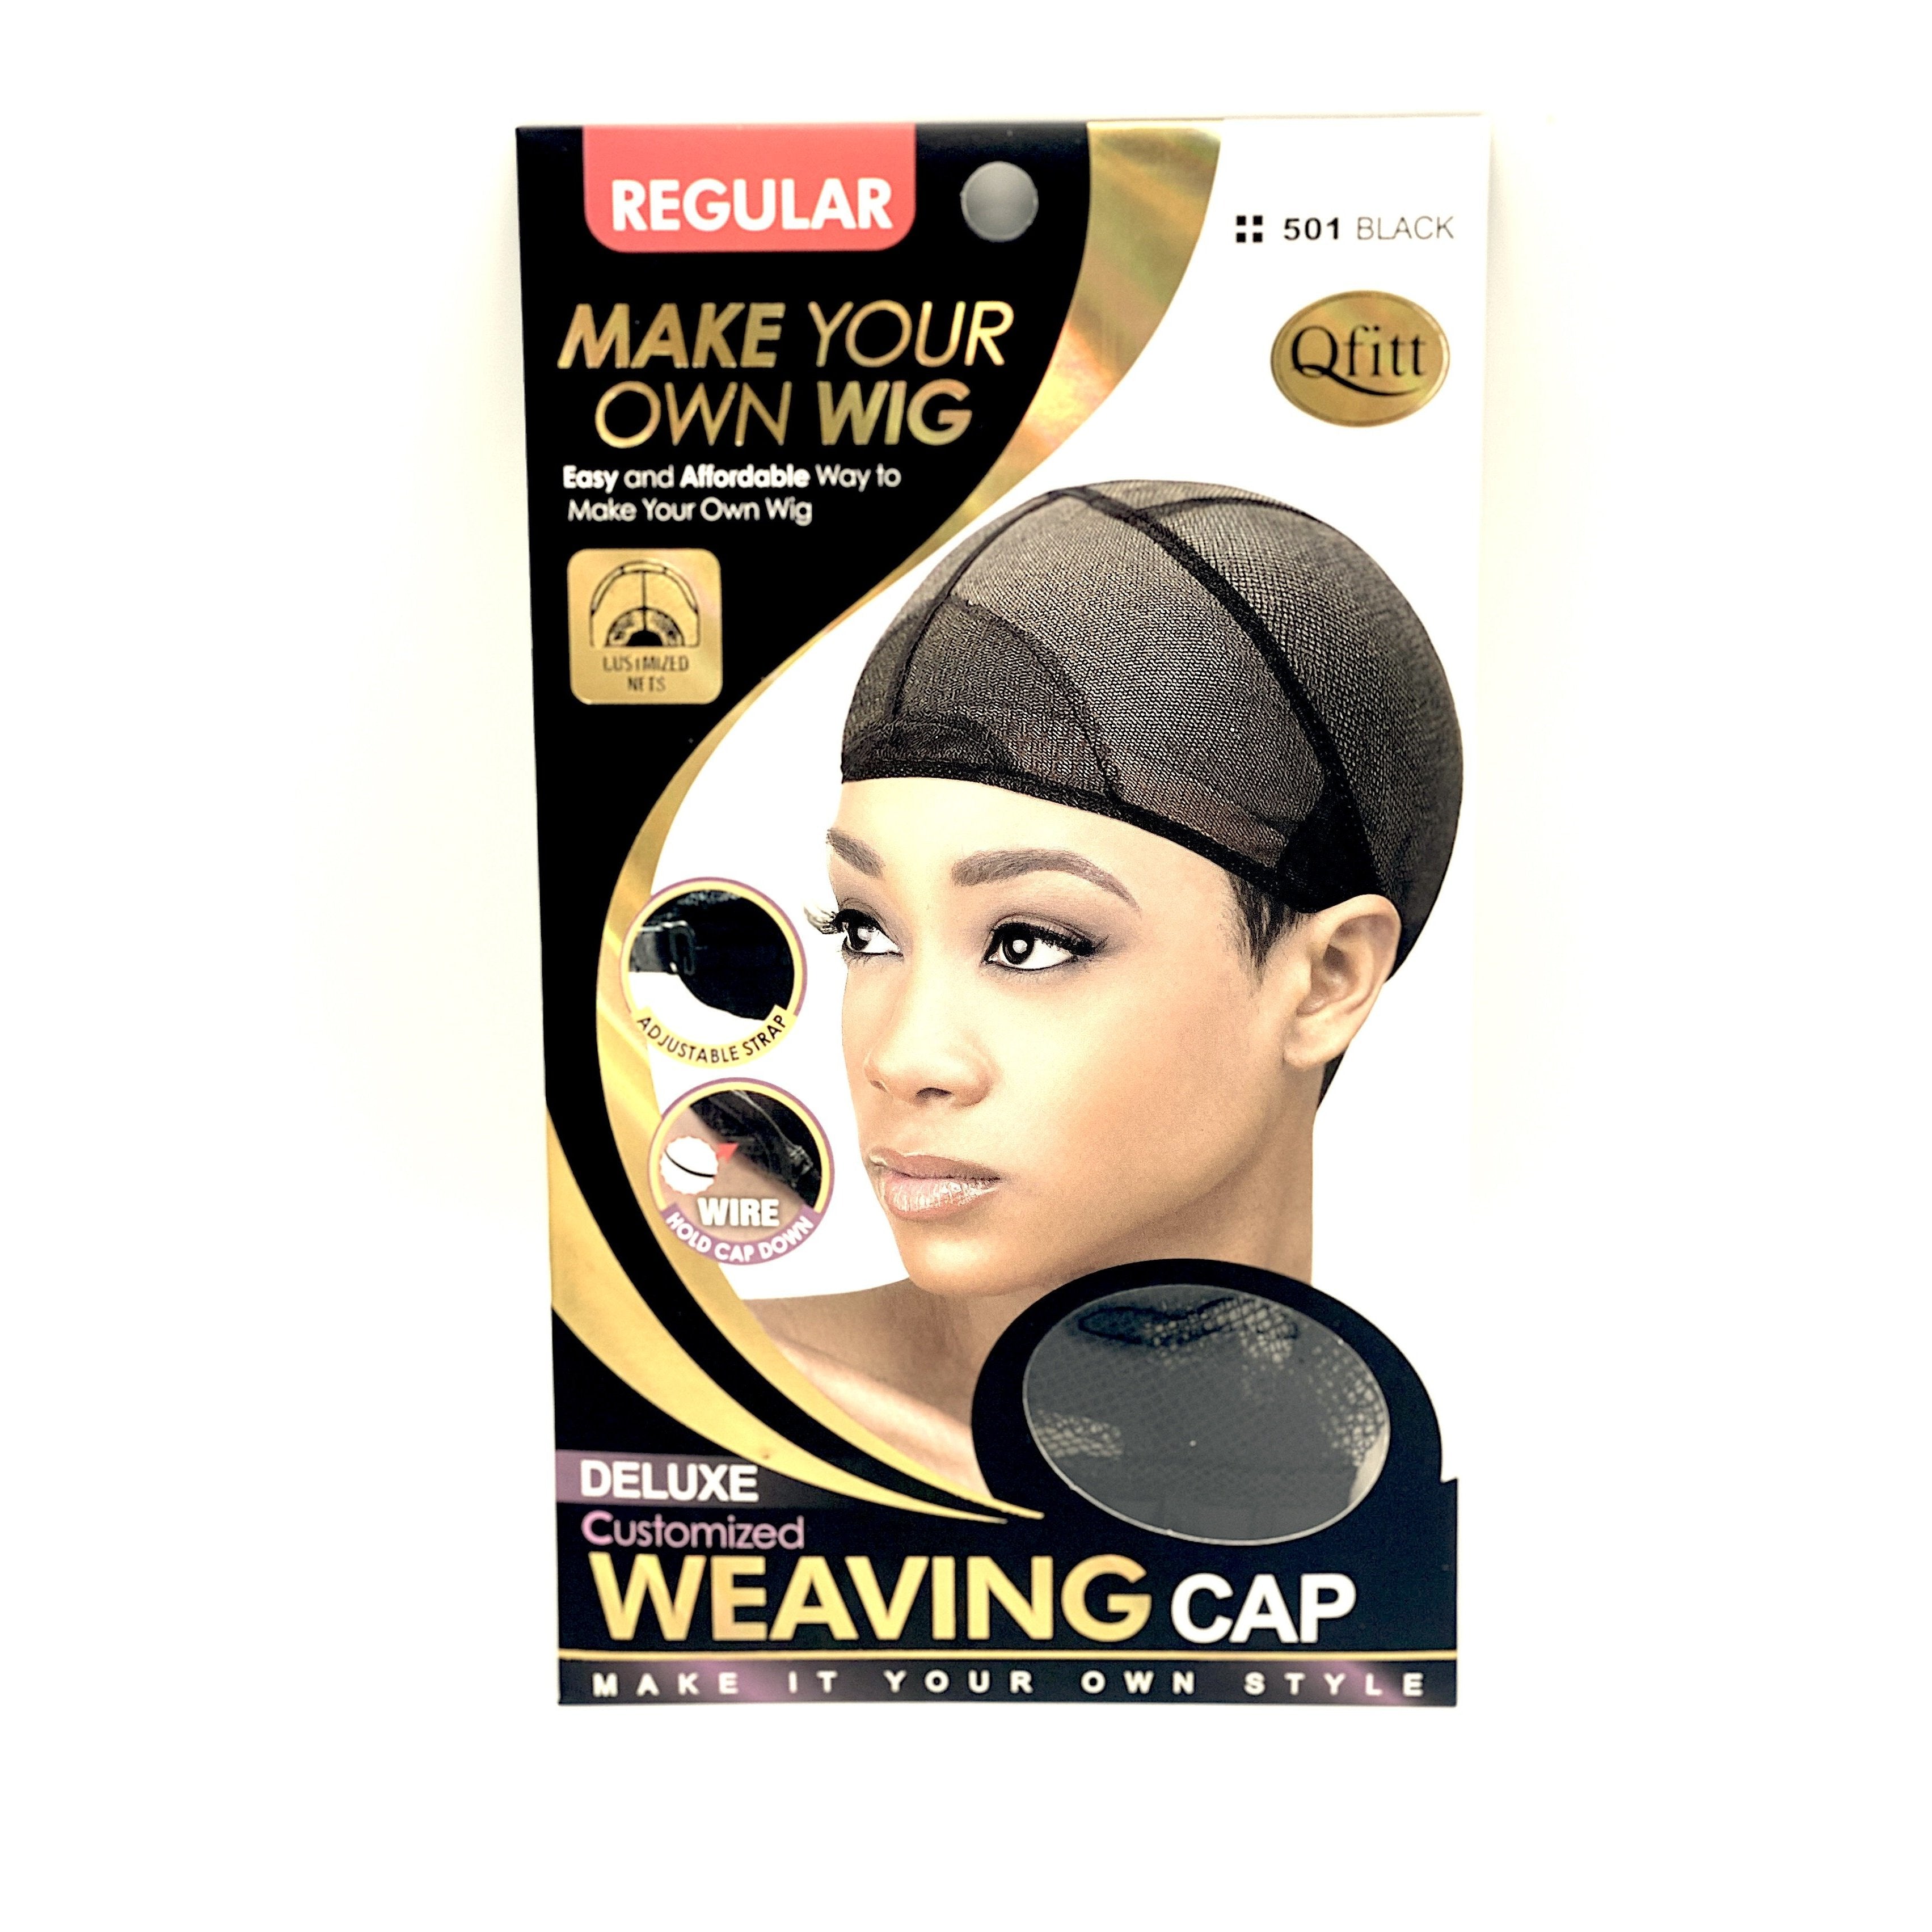 Qfitt Deluxe Customized Weaving Cap 501 Beauty Nation